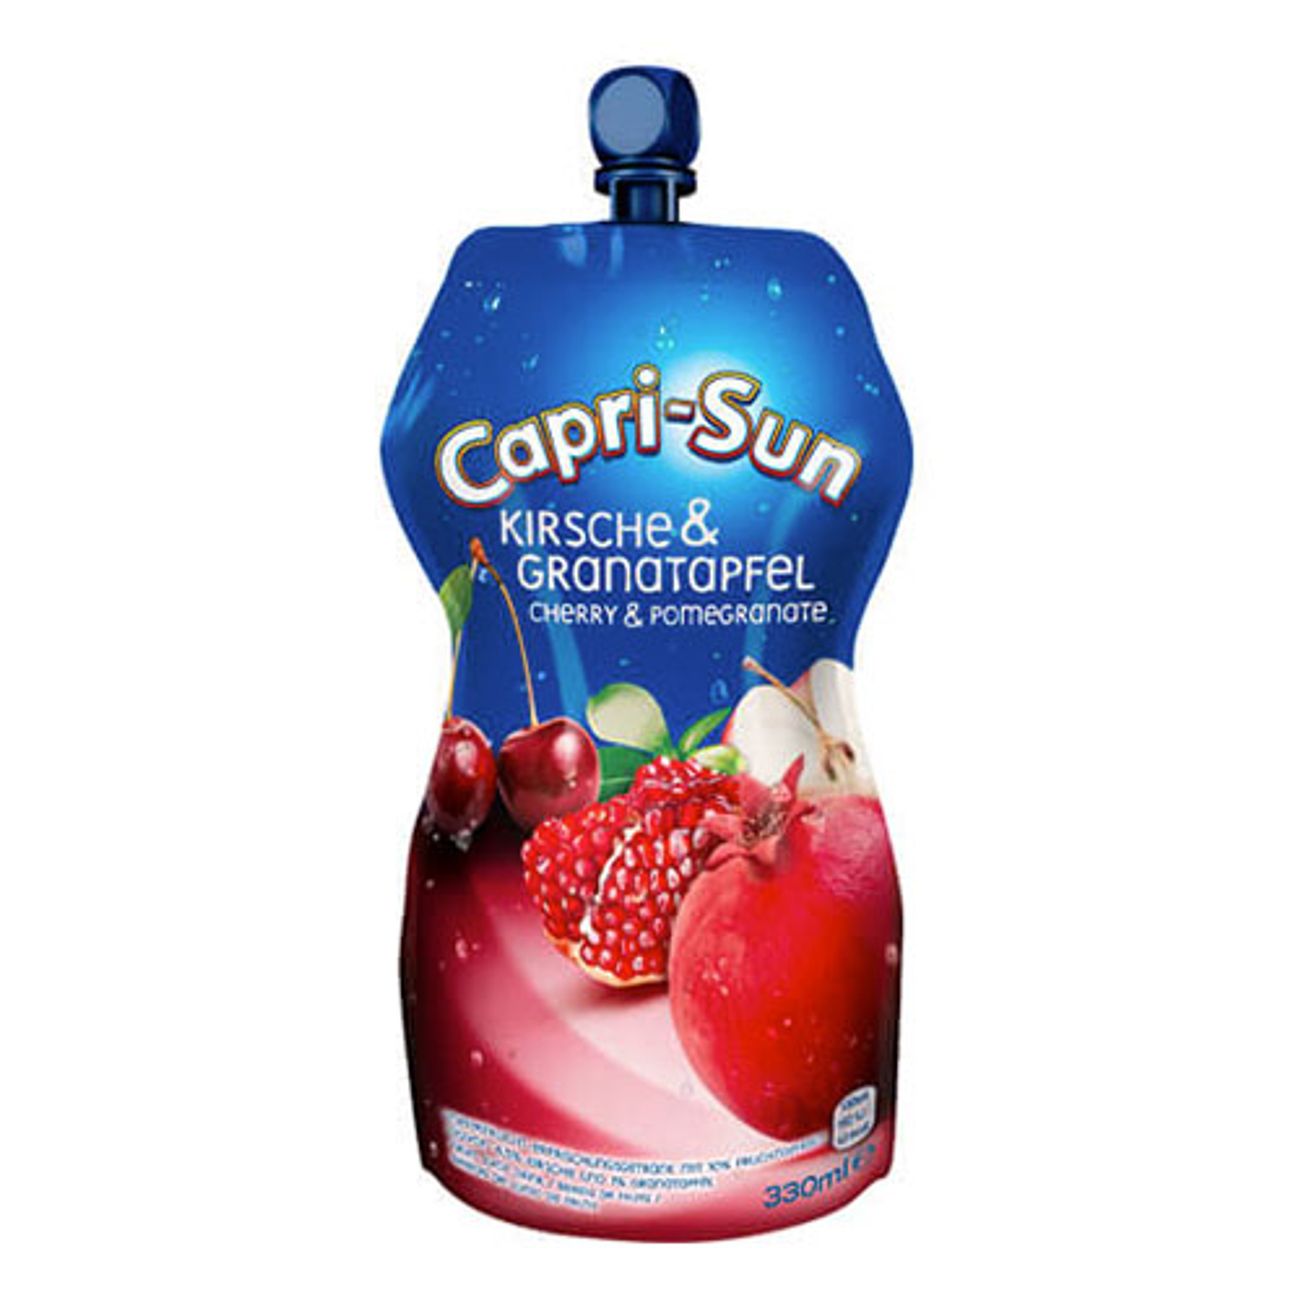 capri-sun-korsbar-granatapple-1